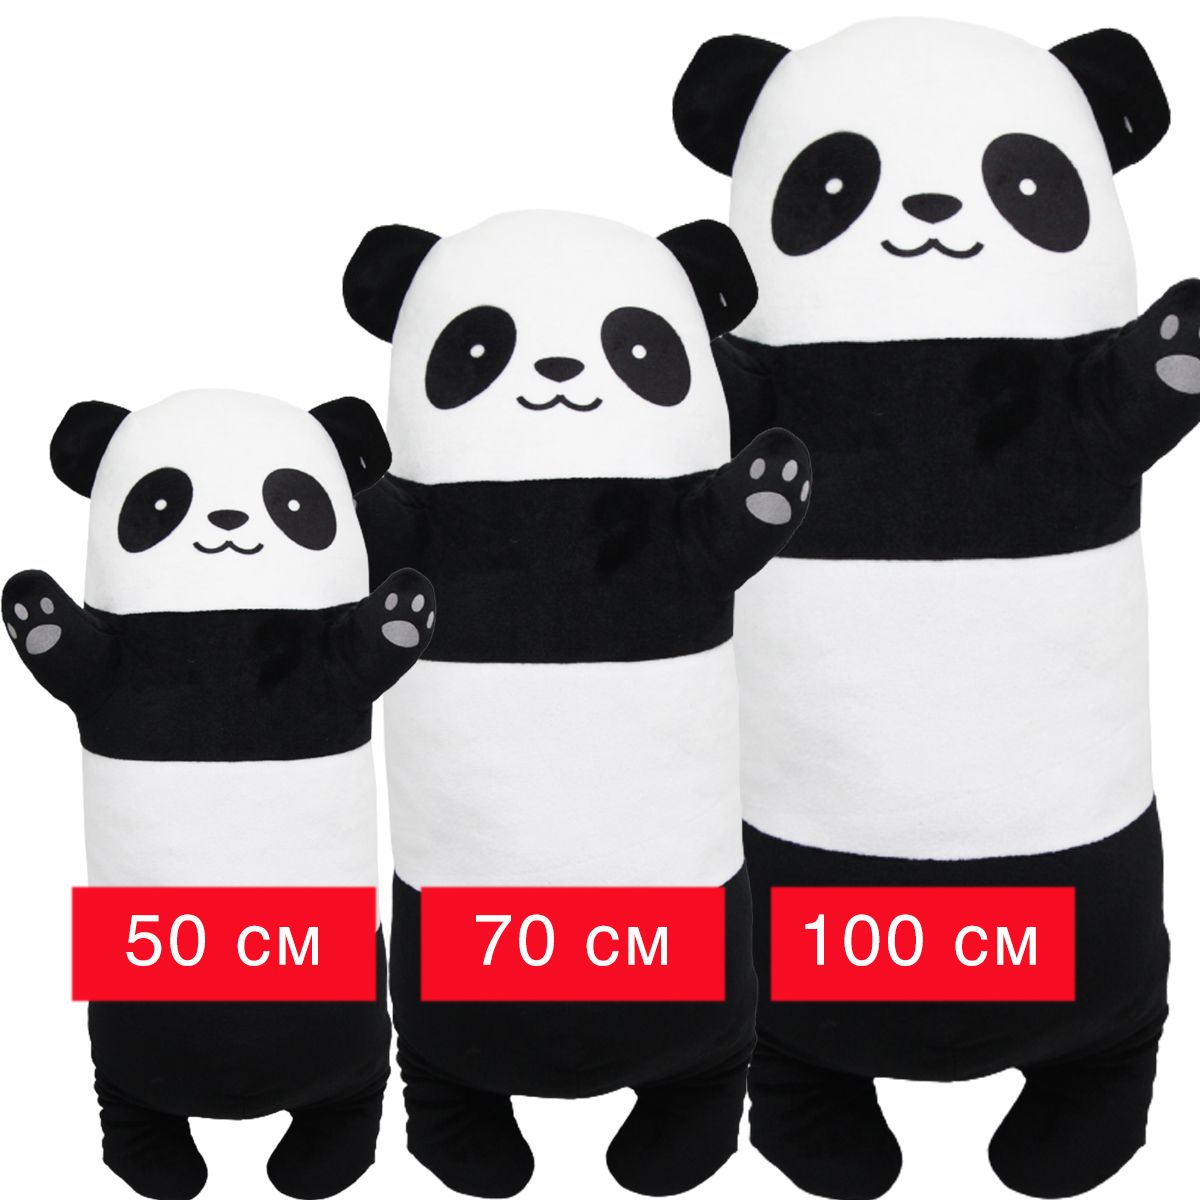 М'яка іграшка-обіймашка "Панда", 50 см